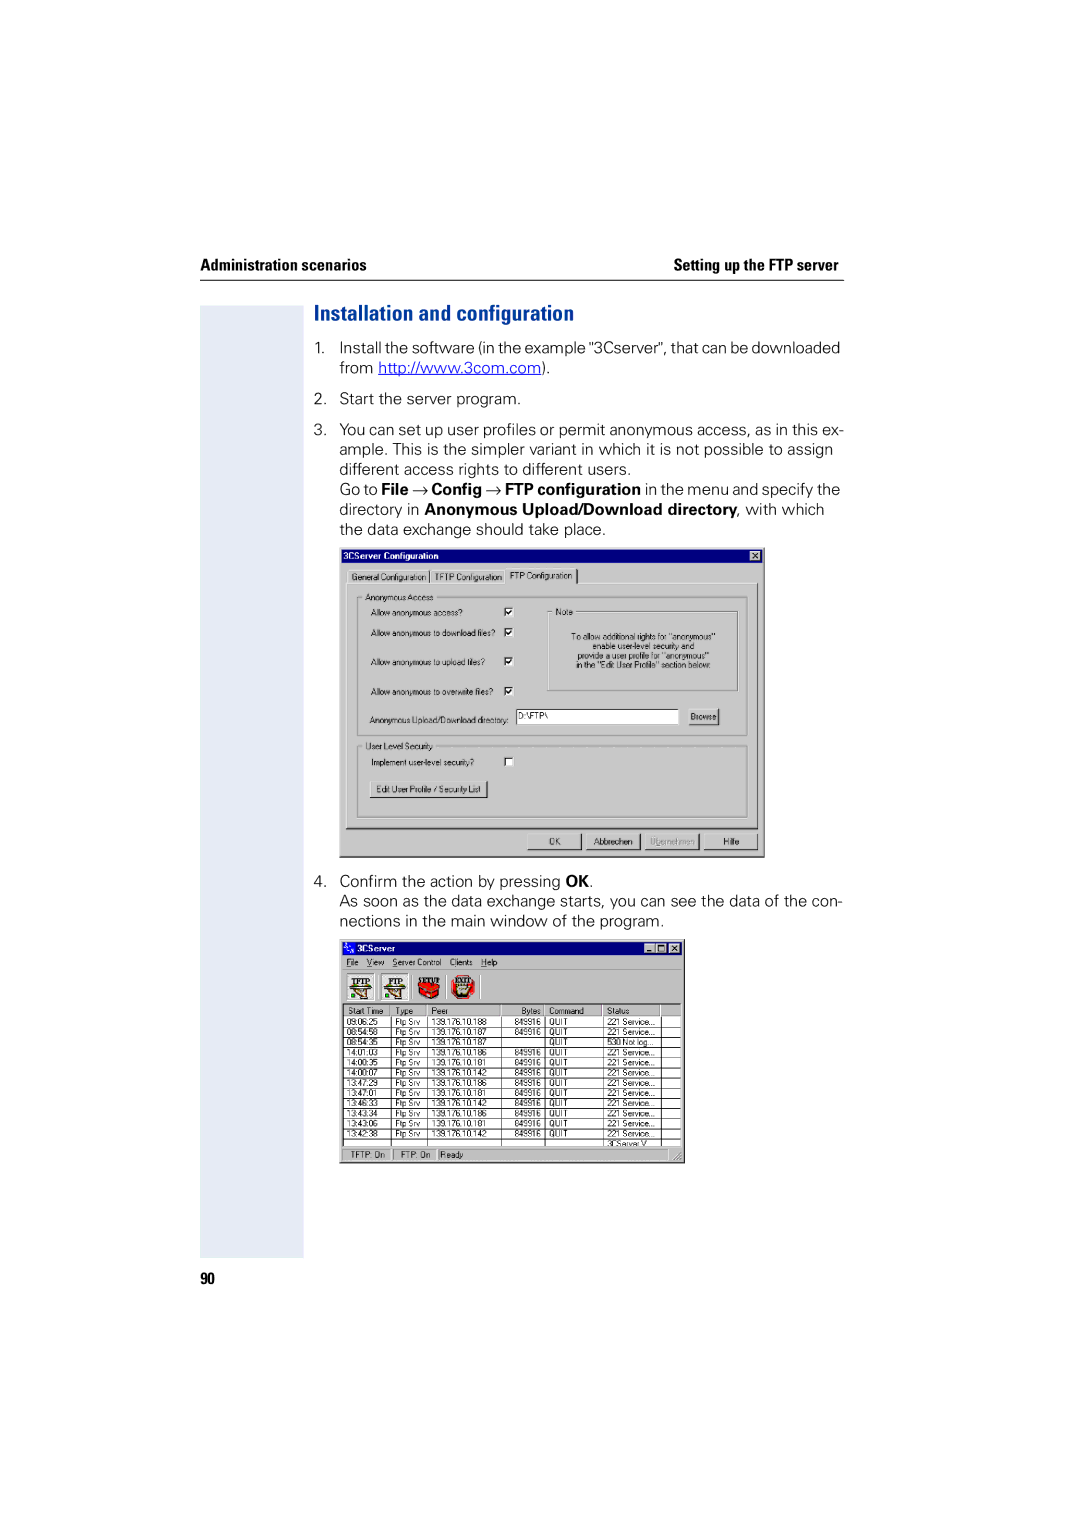 Siemens 2000 manual Installation and configuration, Administration scenarios 